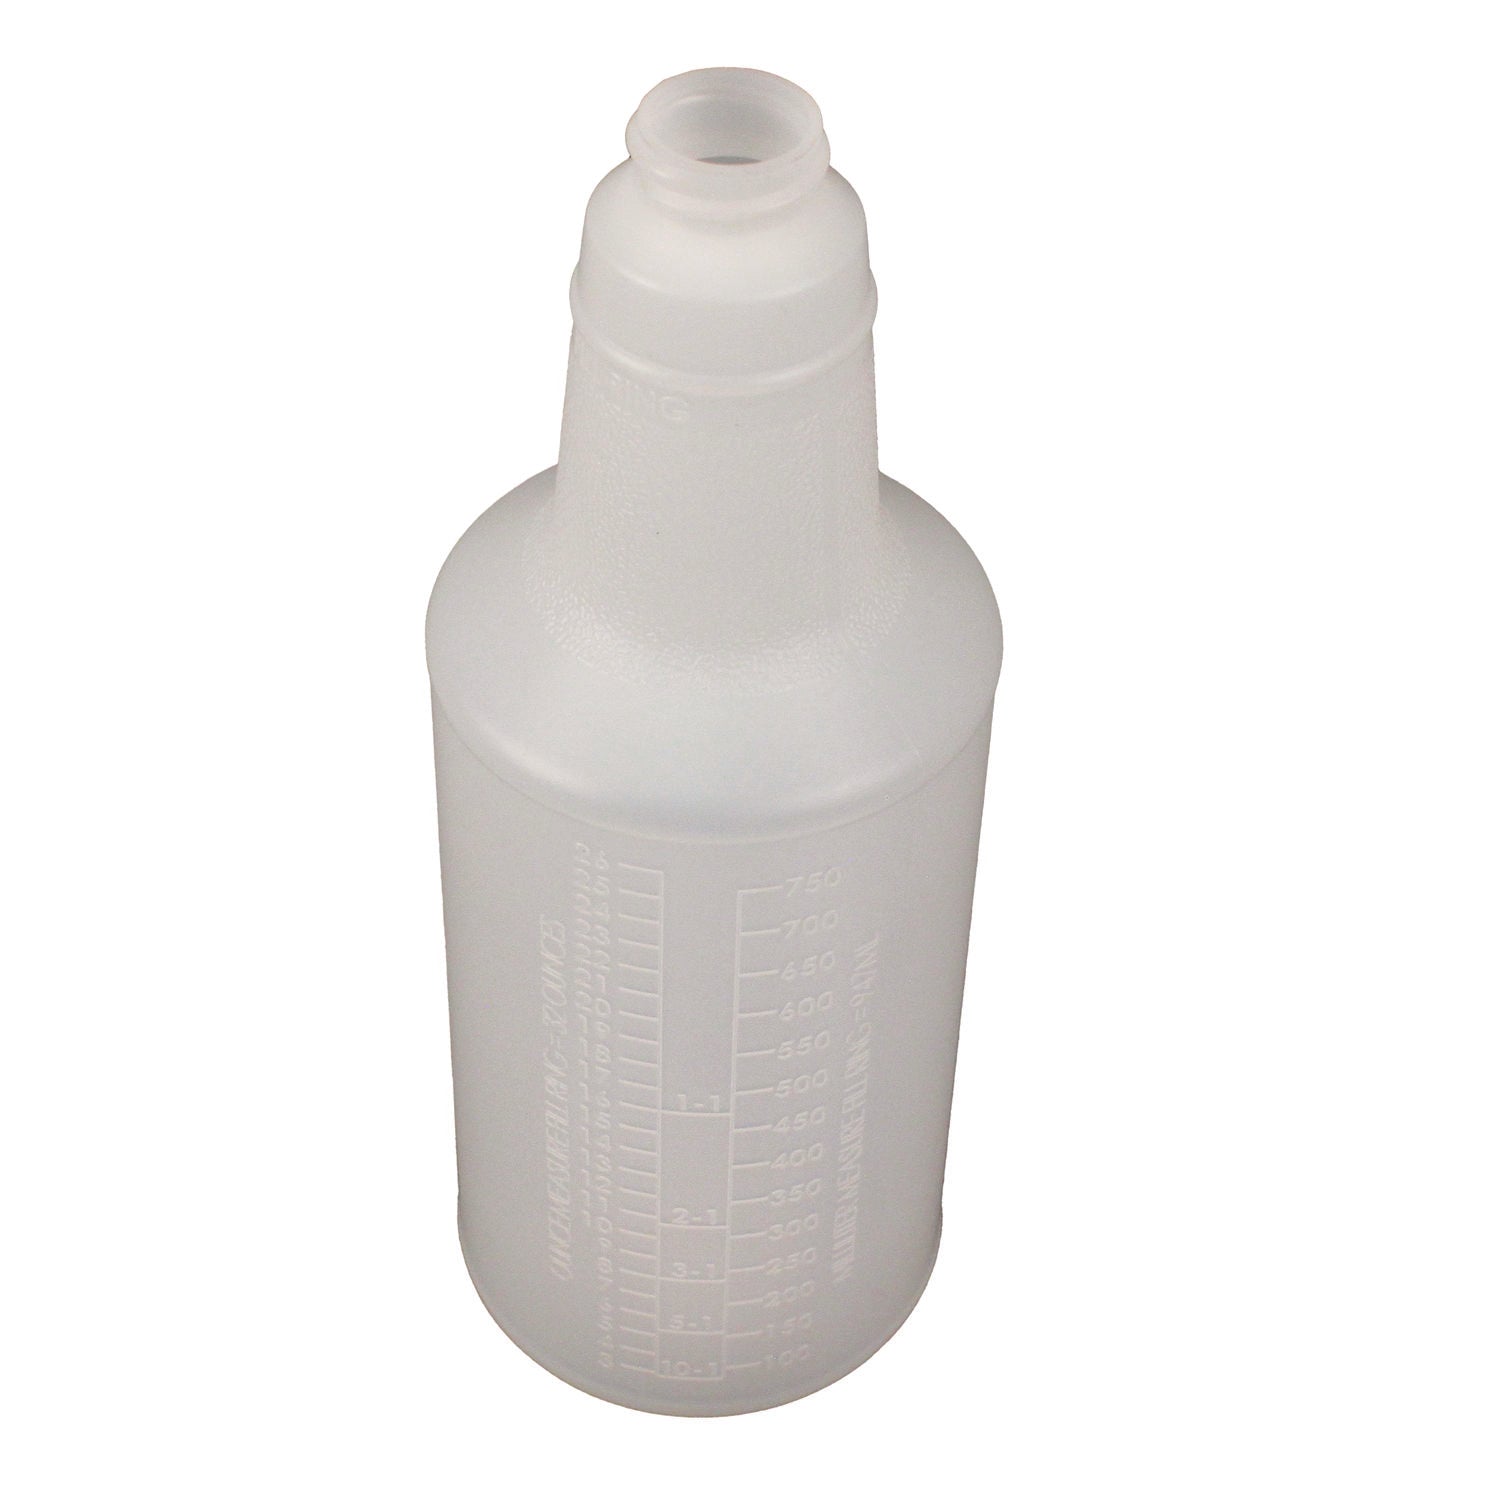 plastic-bottles-with-graduations-32-oz-clear-12-carton_imp5032wgdzun - 1